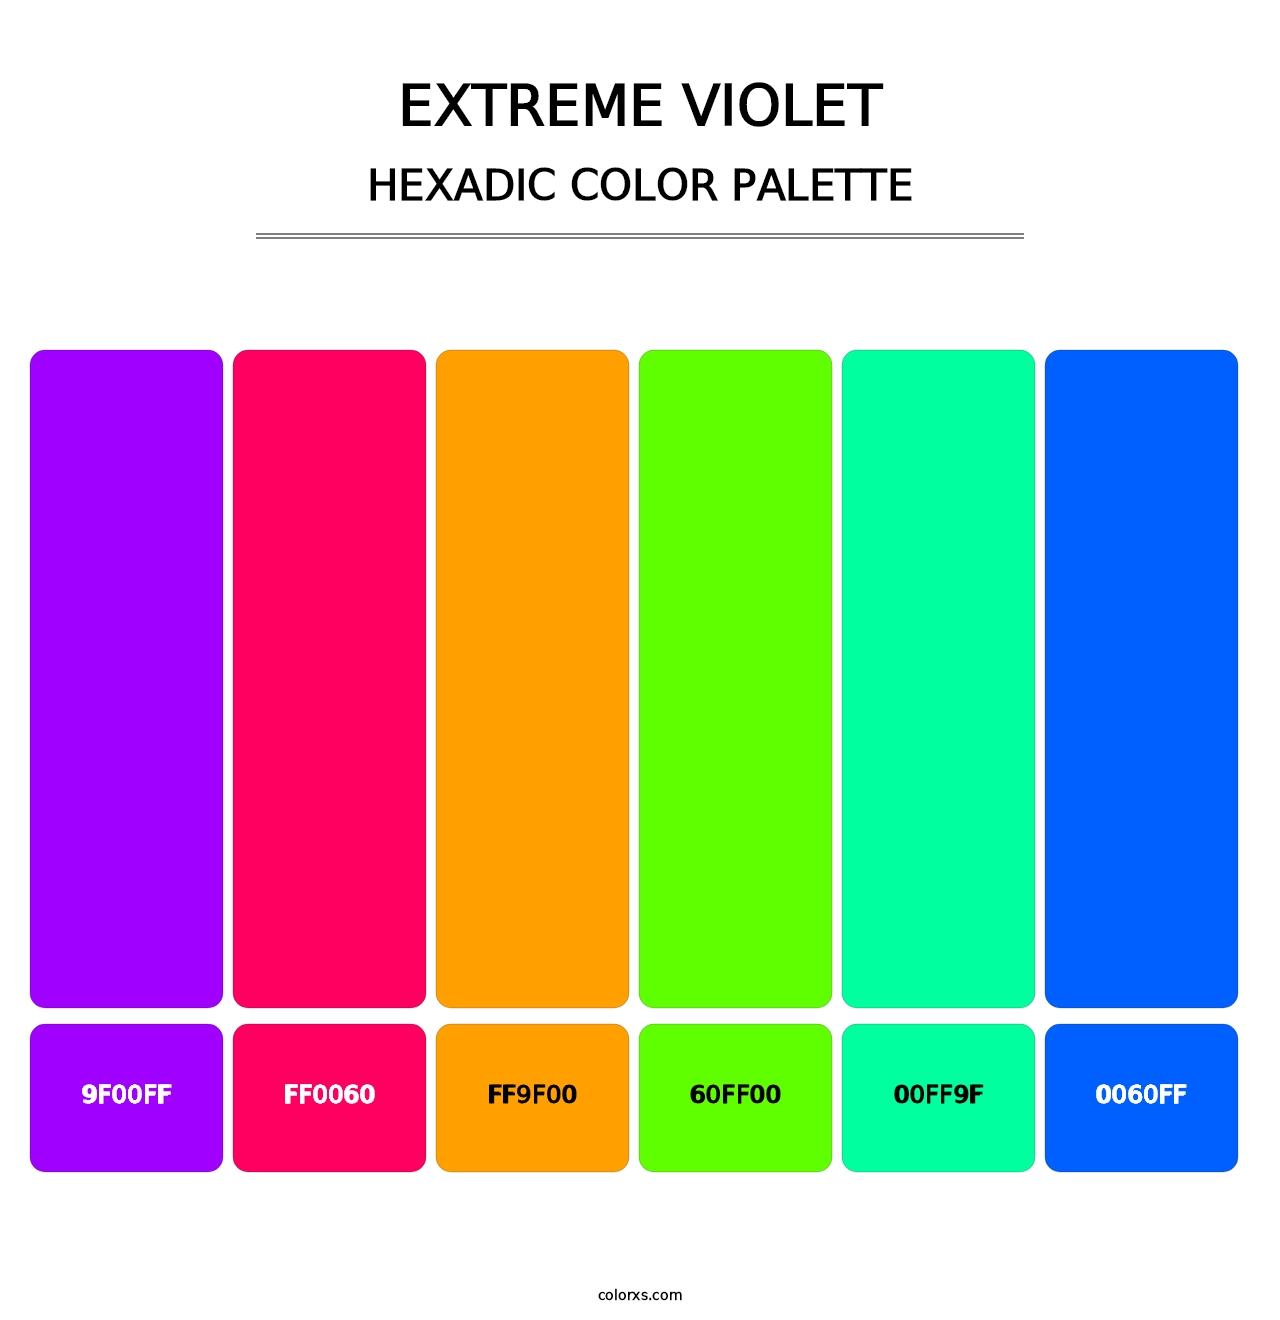 Extreme Violet - Hexadic Color Palette